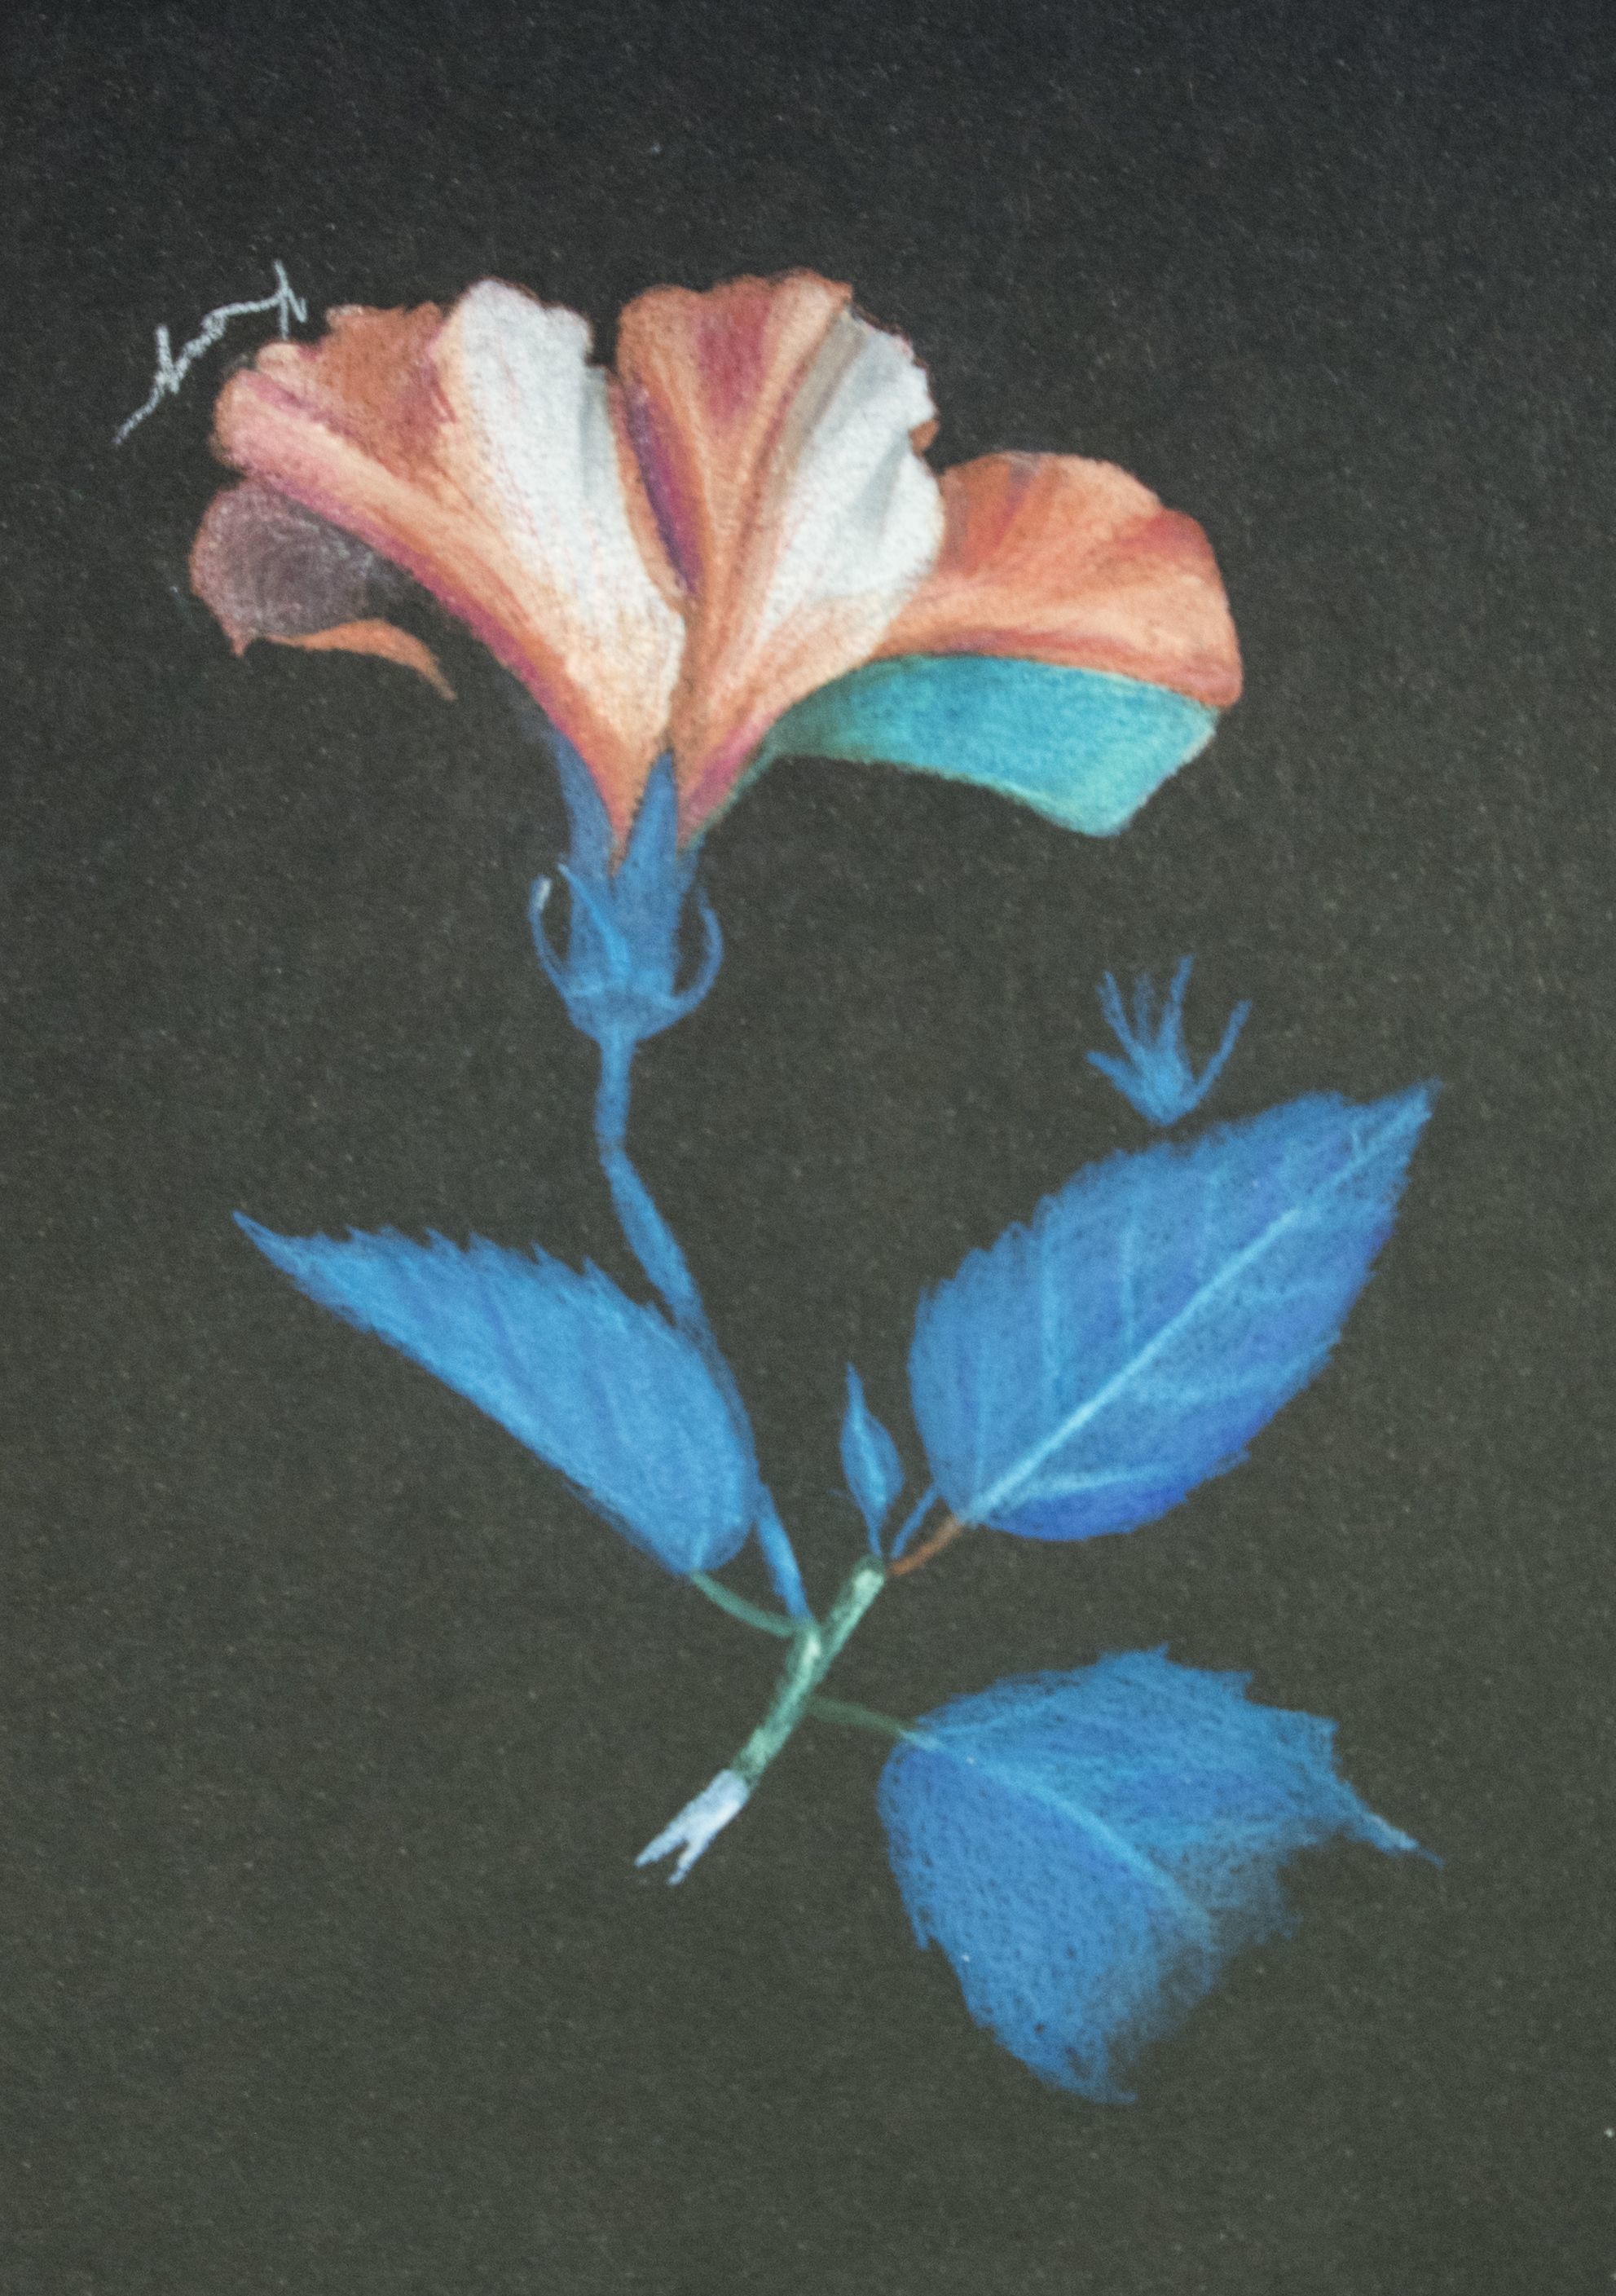 Kamryn Craig - "The Bloom"